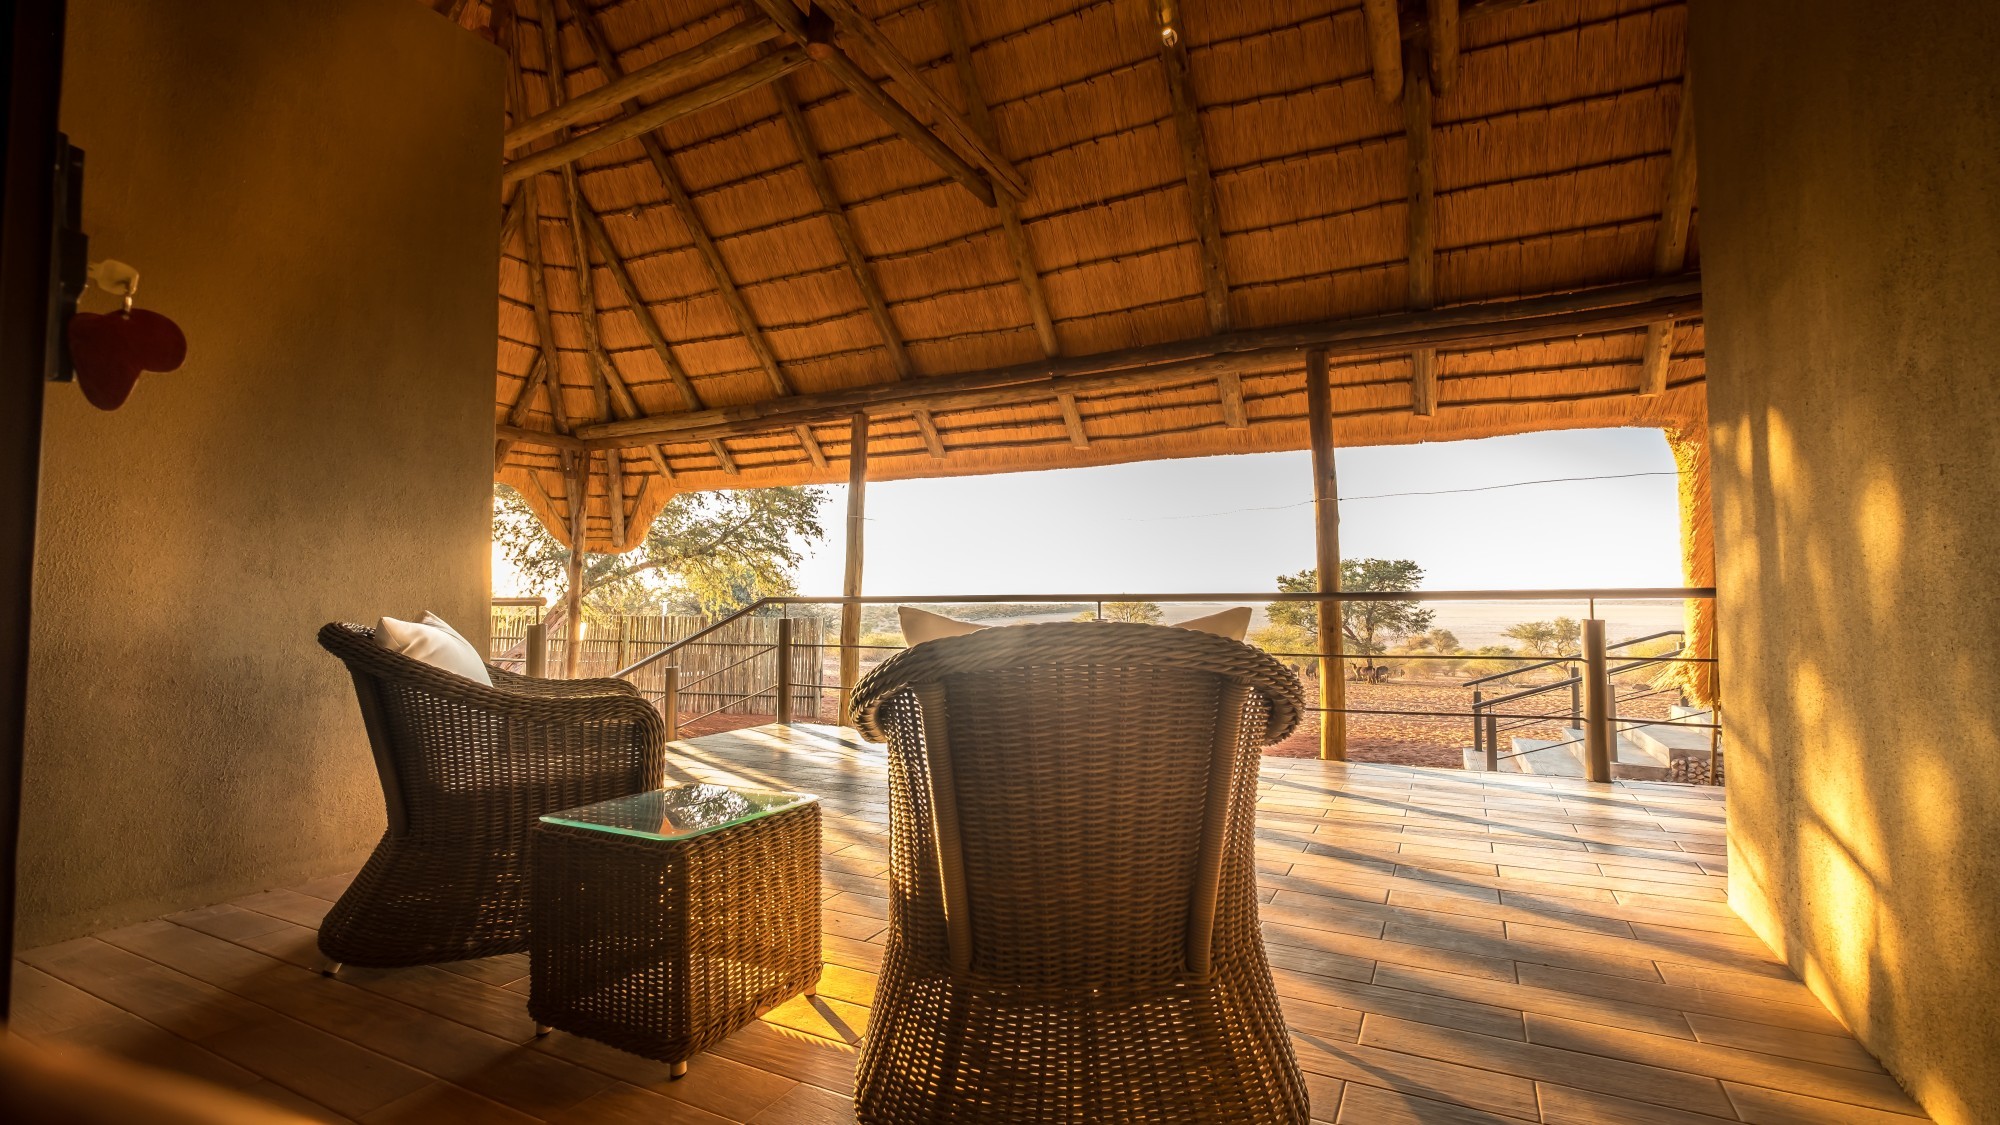 Bagatelle Lodge - Kalahari Game Ranch - Namibia - Farmhouse bedroom terrace2